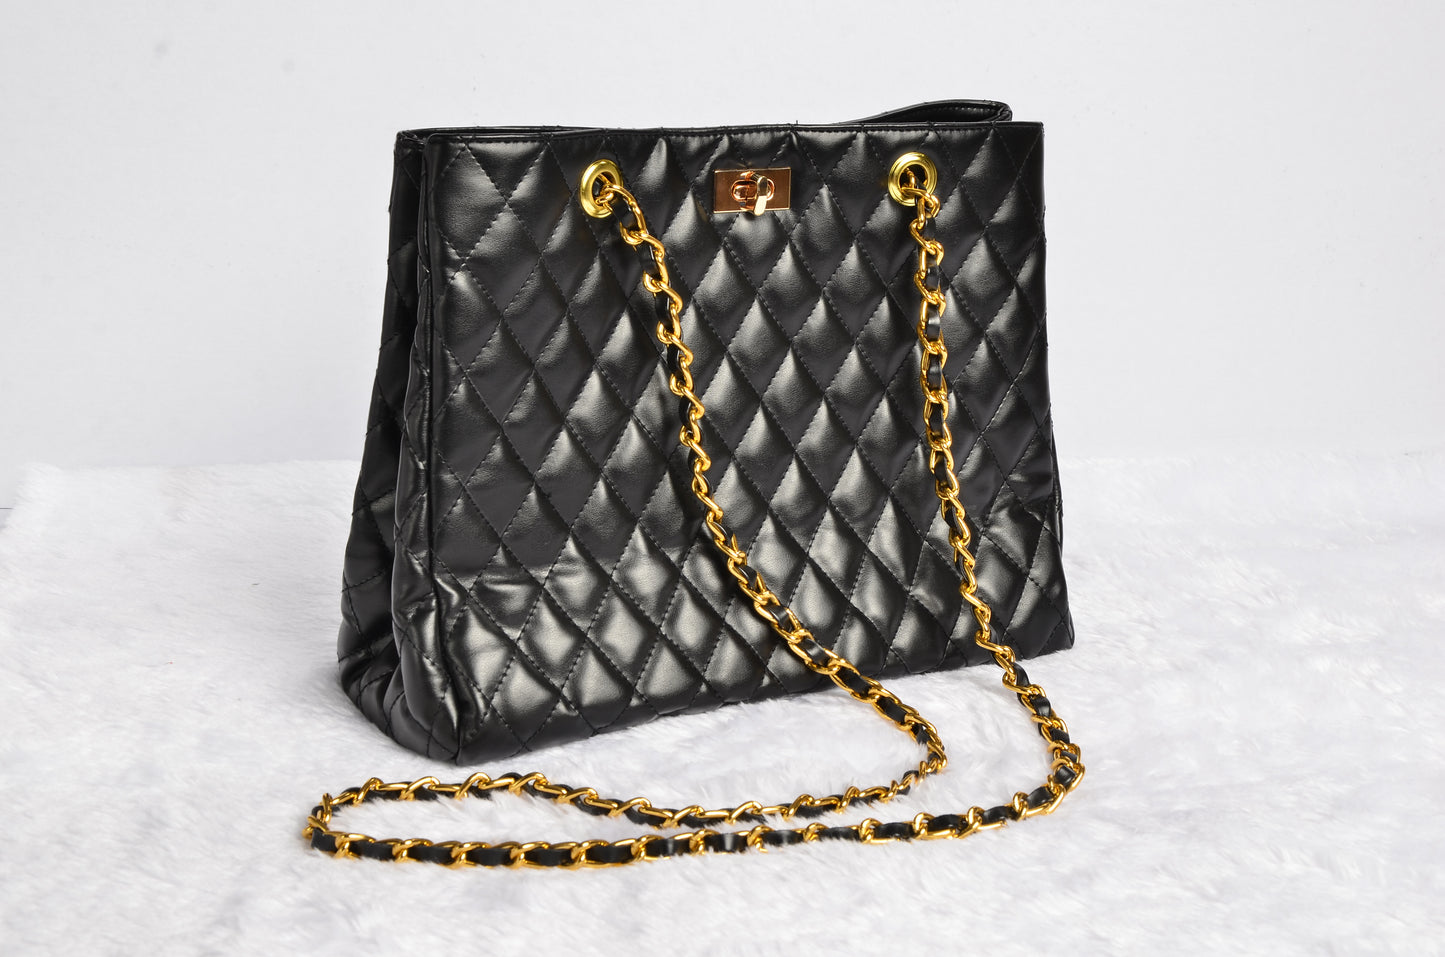 Stylish handbag with gold chain strap